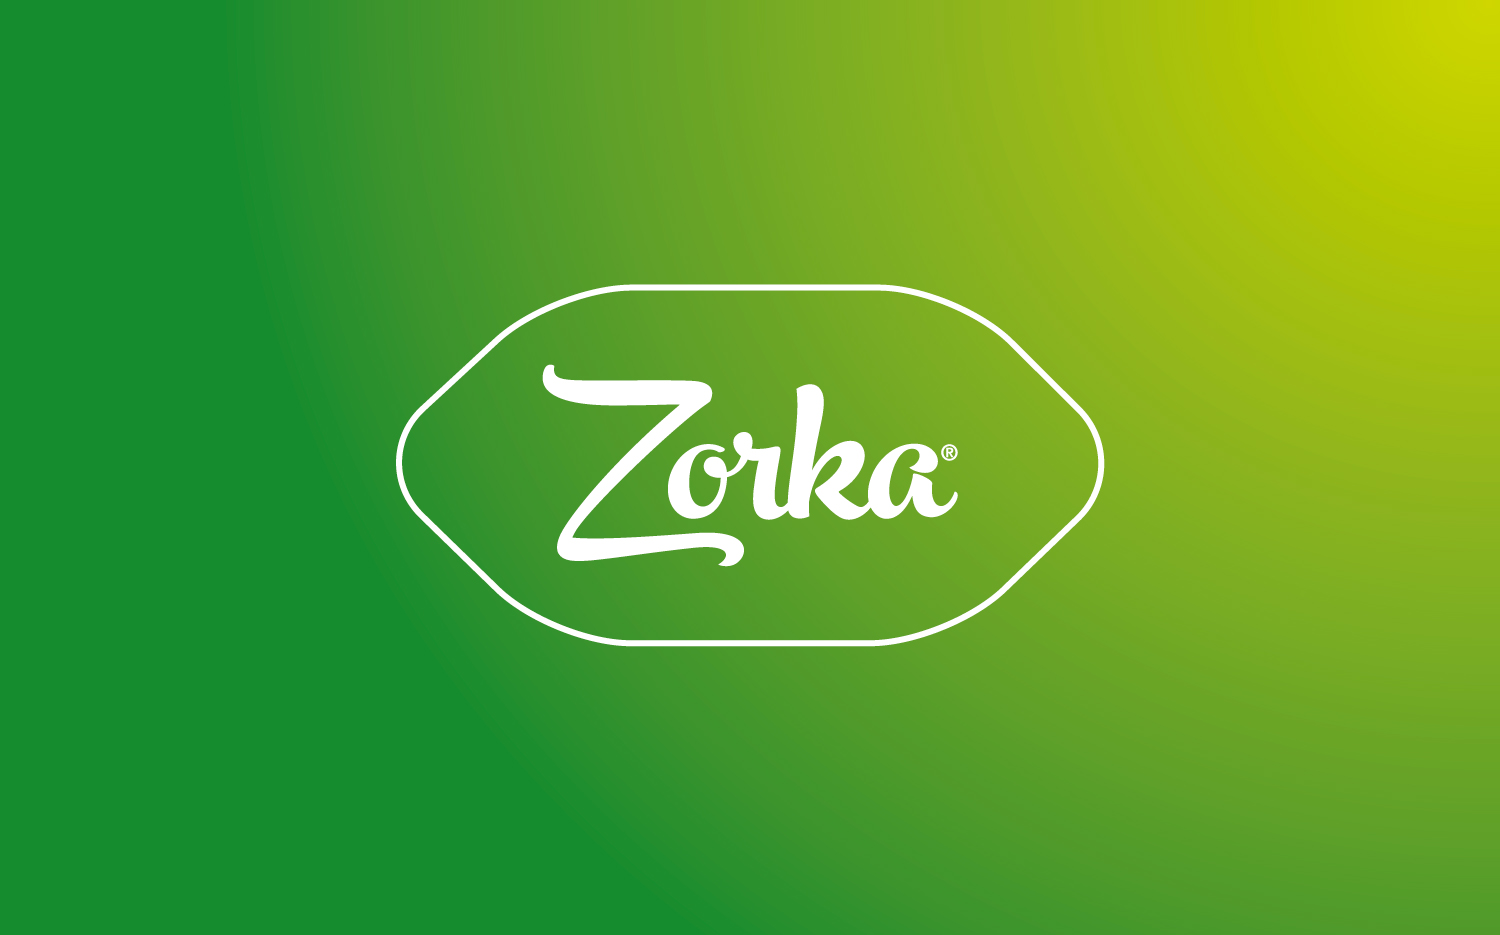 Identidad corporativa de Zorka